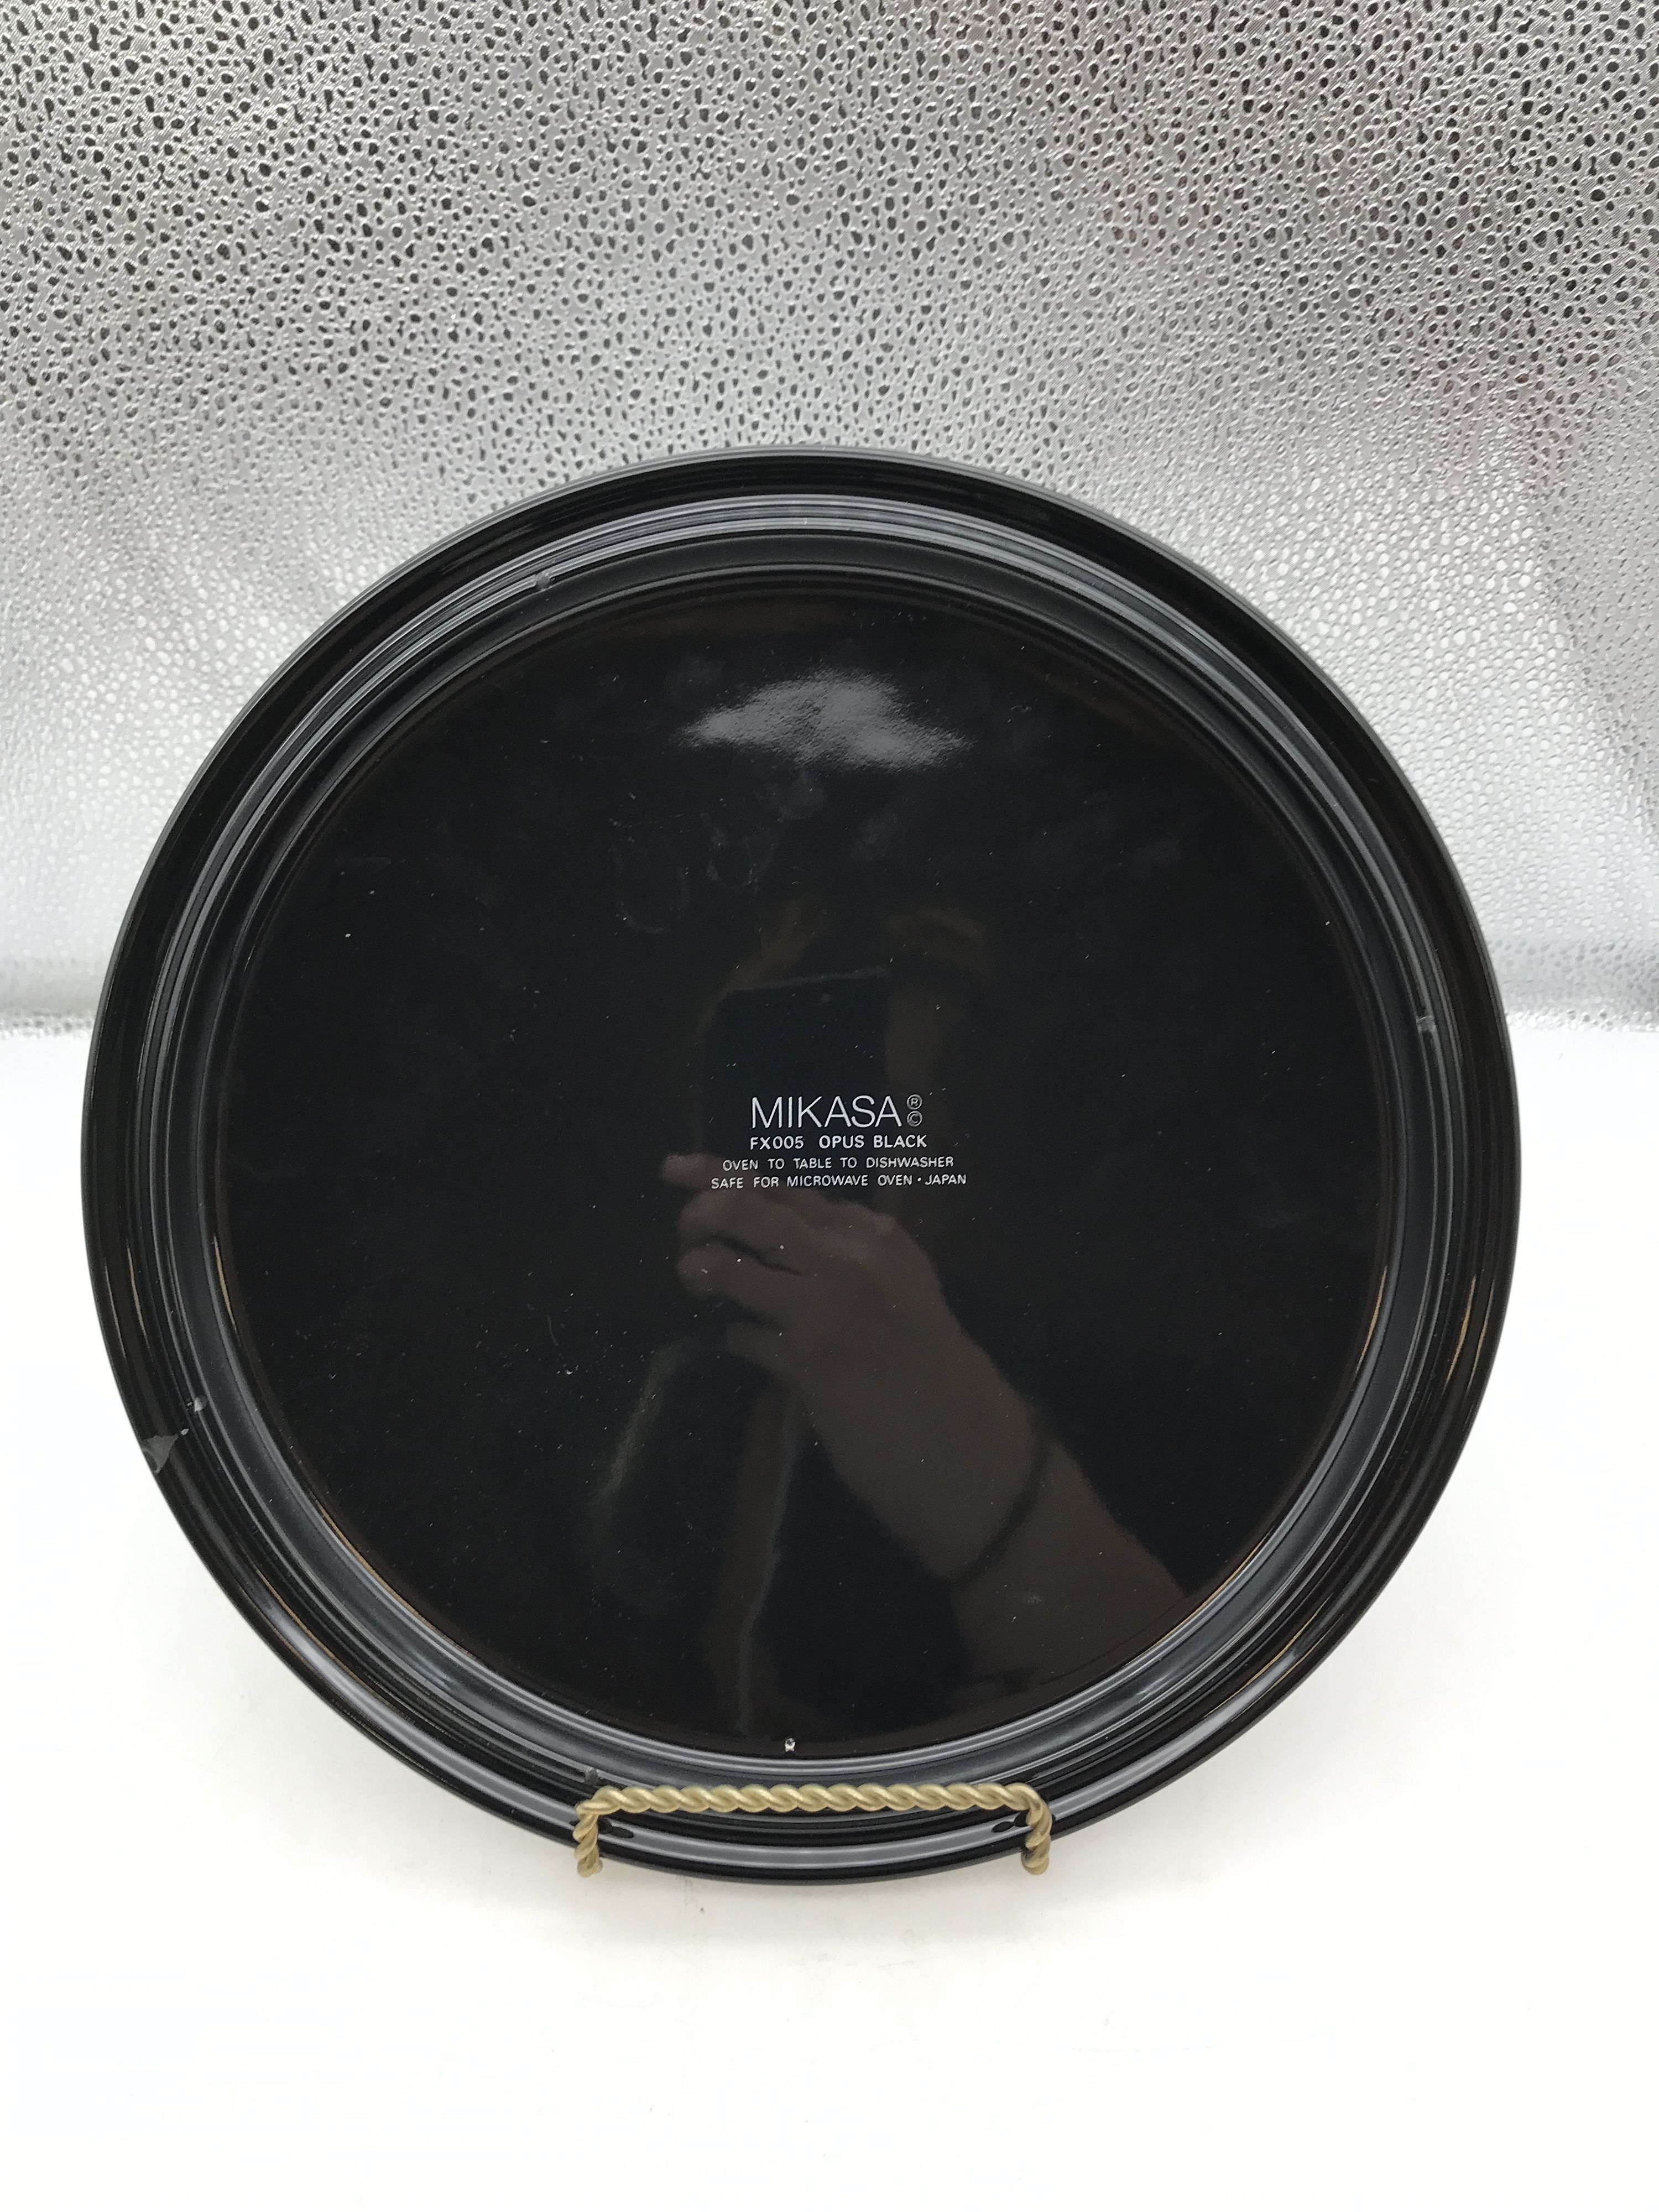 Mikasa Opus Black Fx005 Calla Lily Cake Plate 10.5" Serving Platter